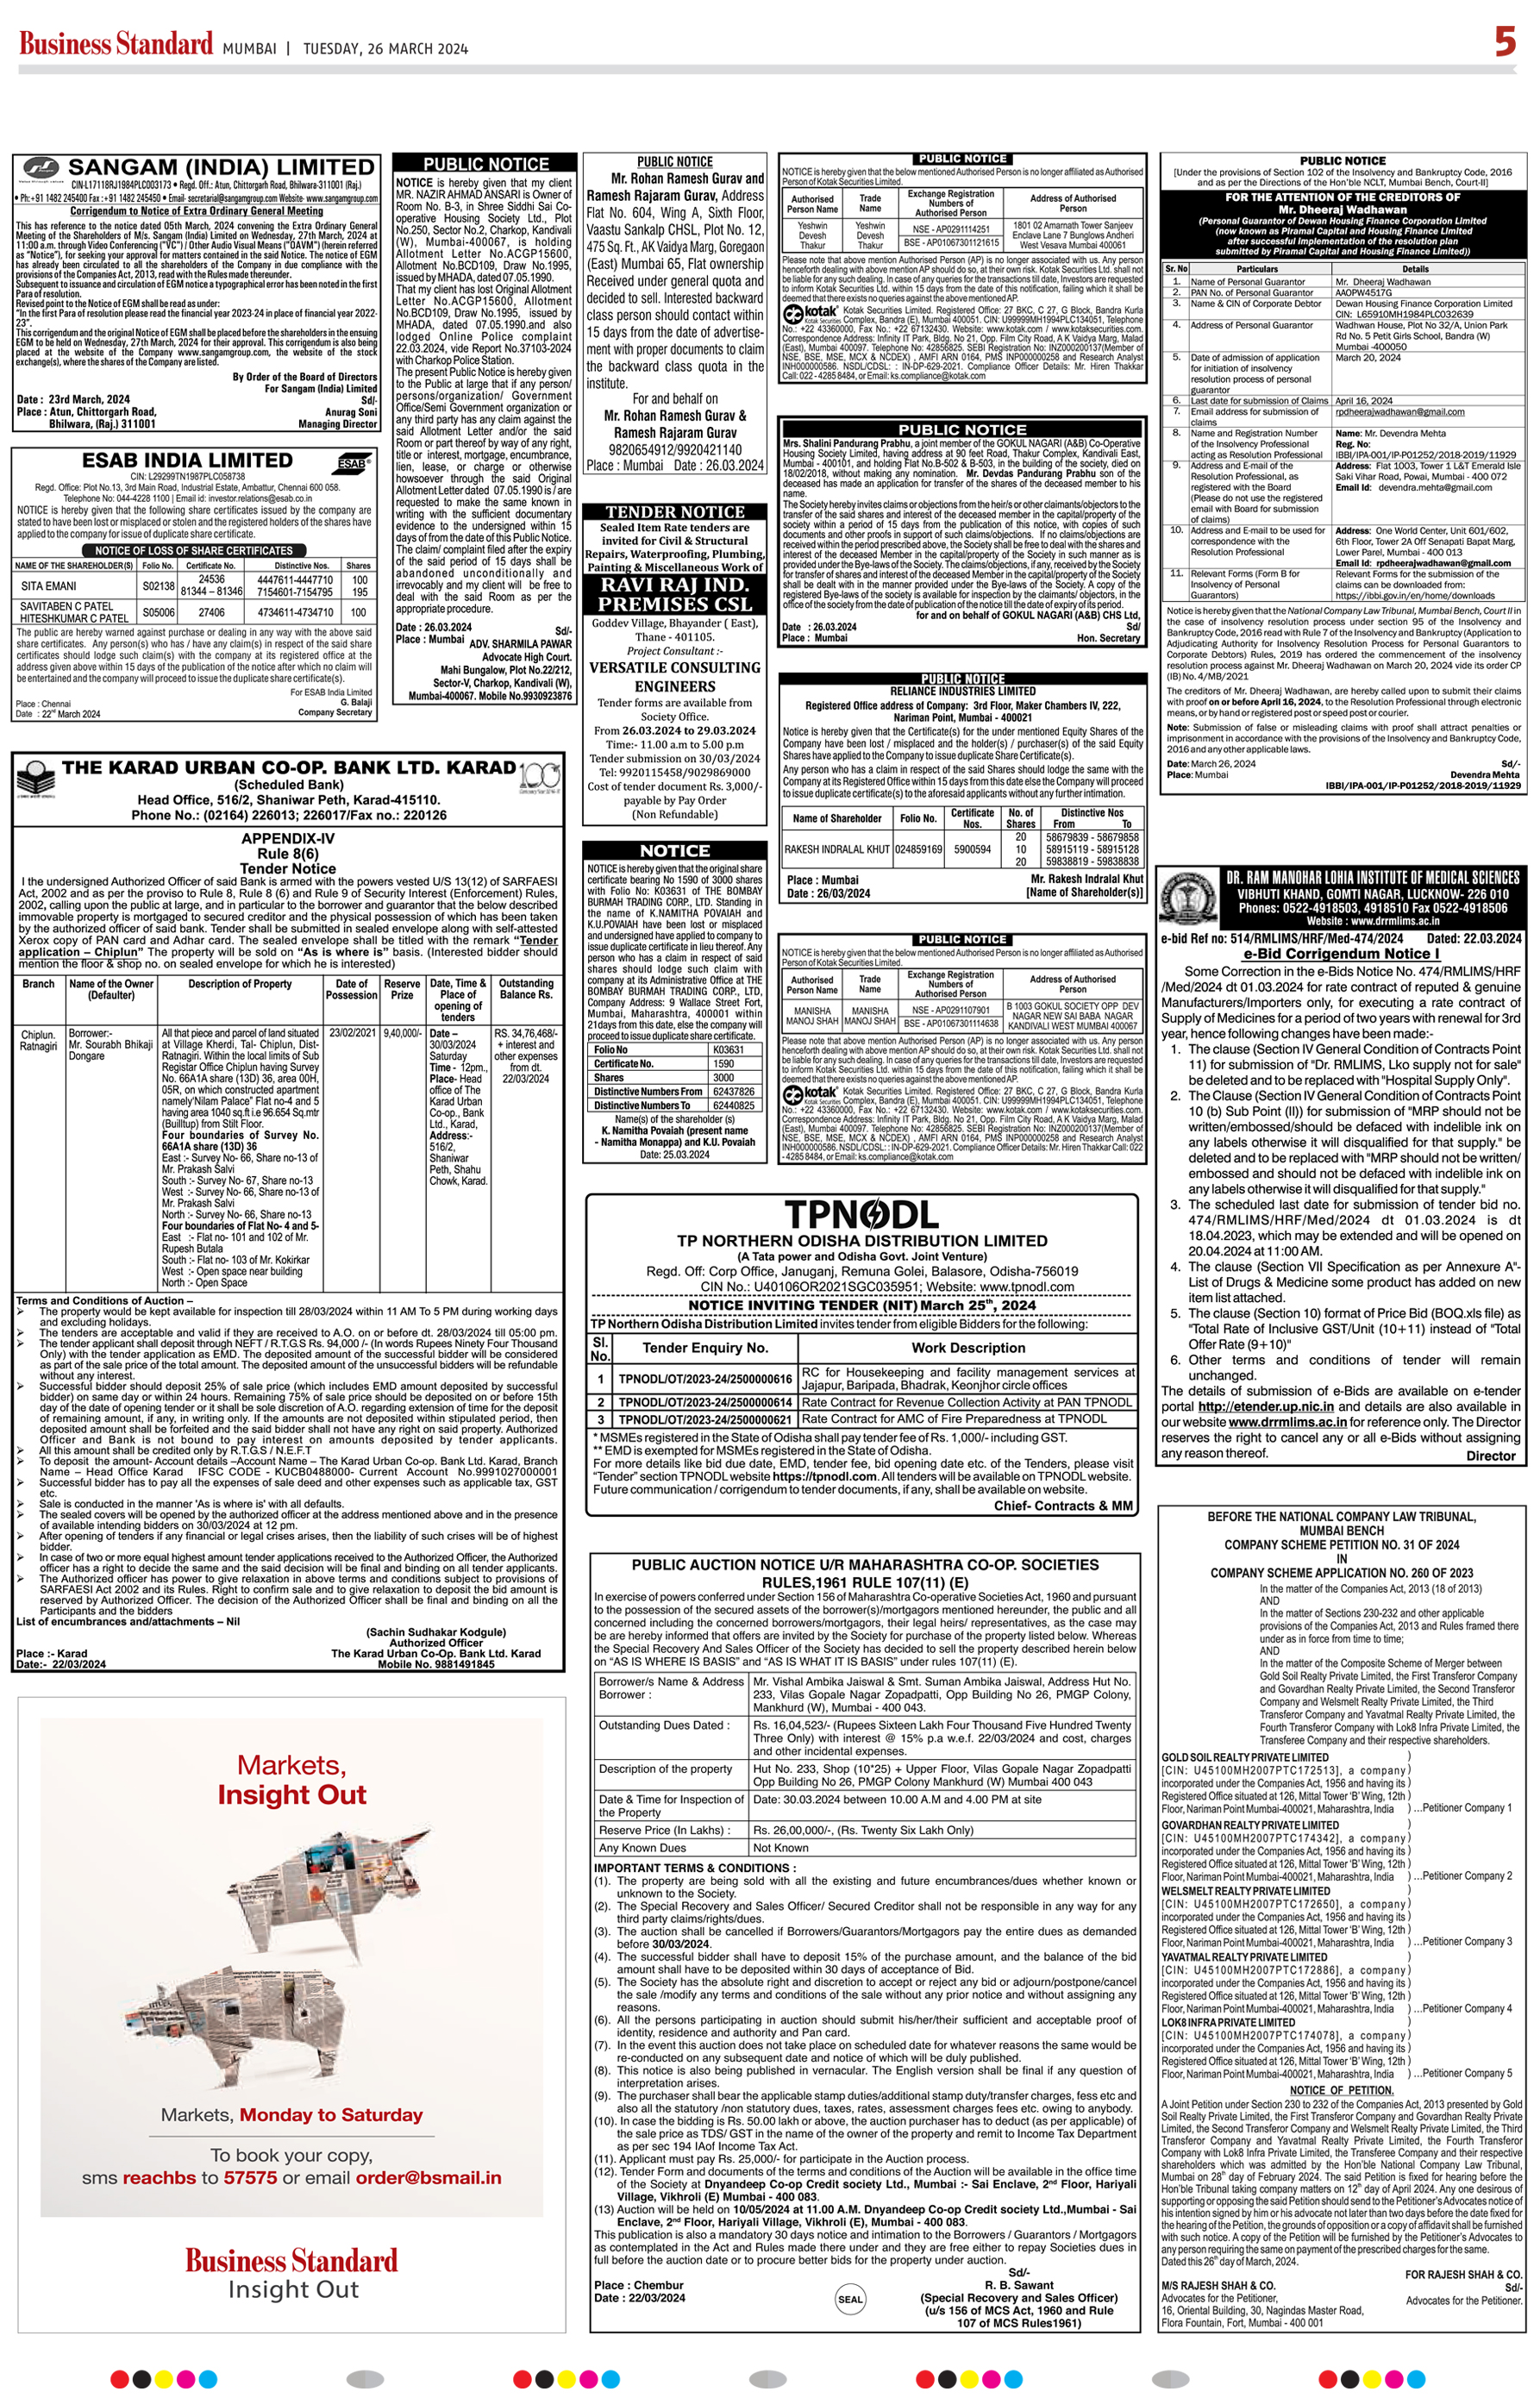 Share Certificate Lost Ad in Newspaper